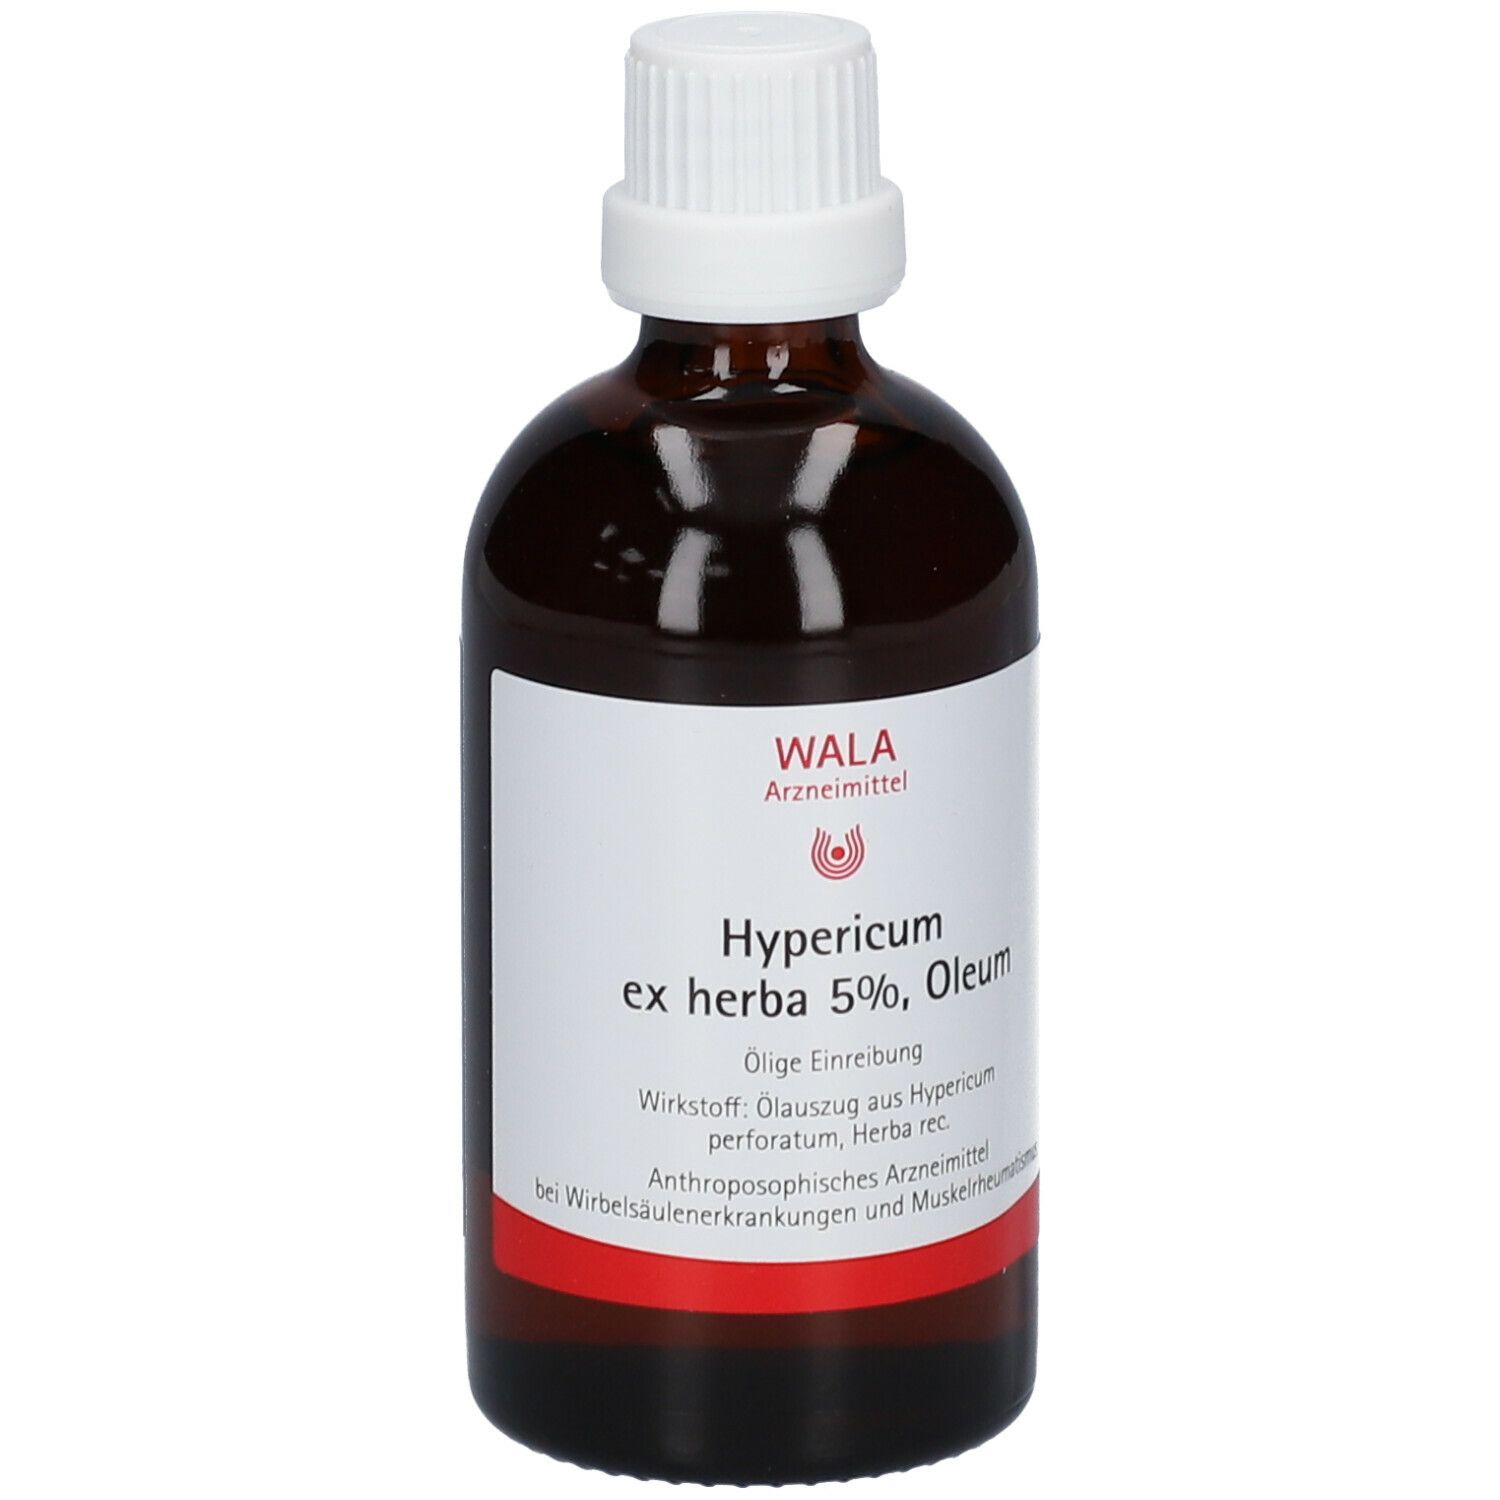 WALA® Hypericum Ex Herba 5% Oleum